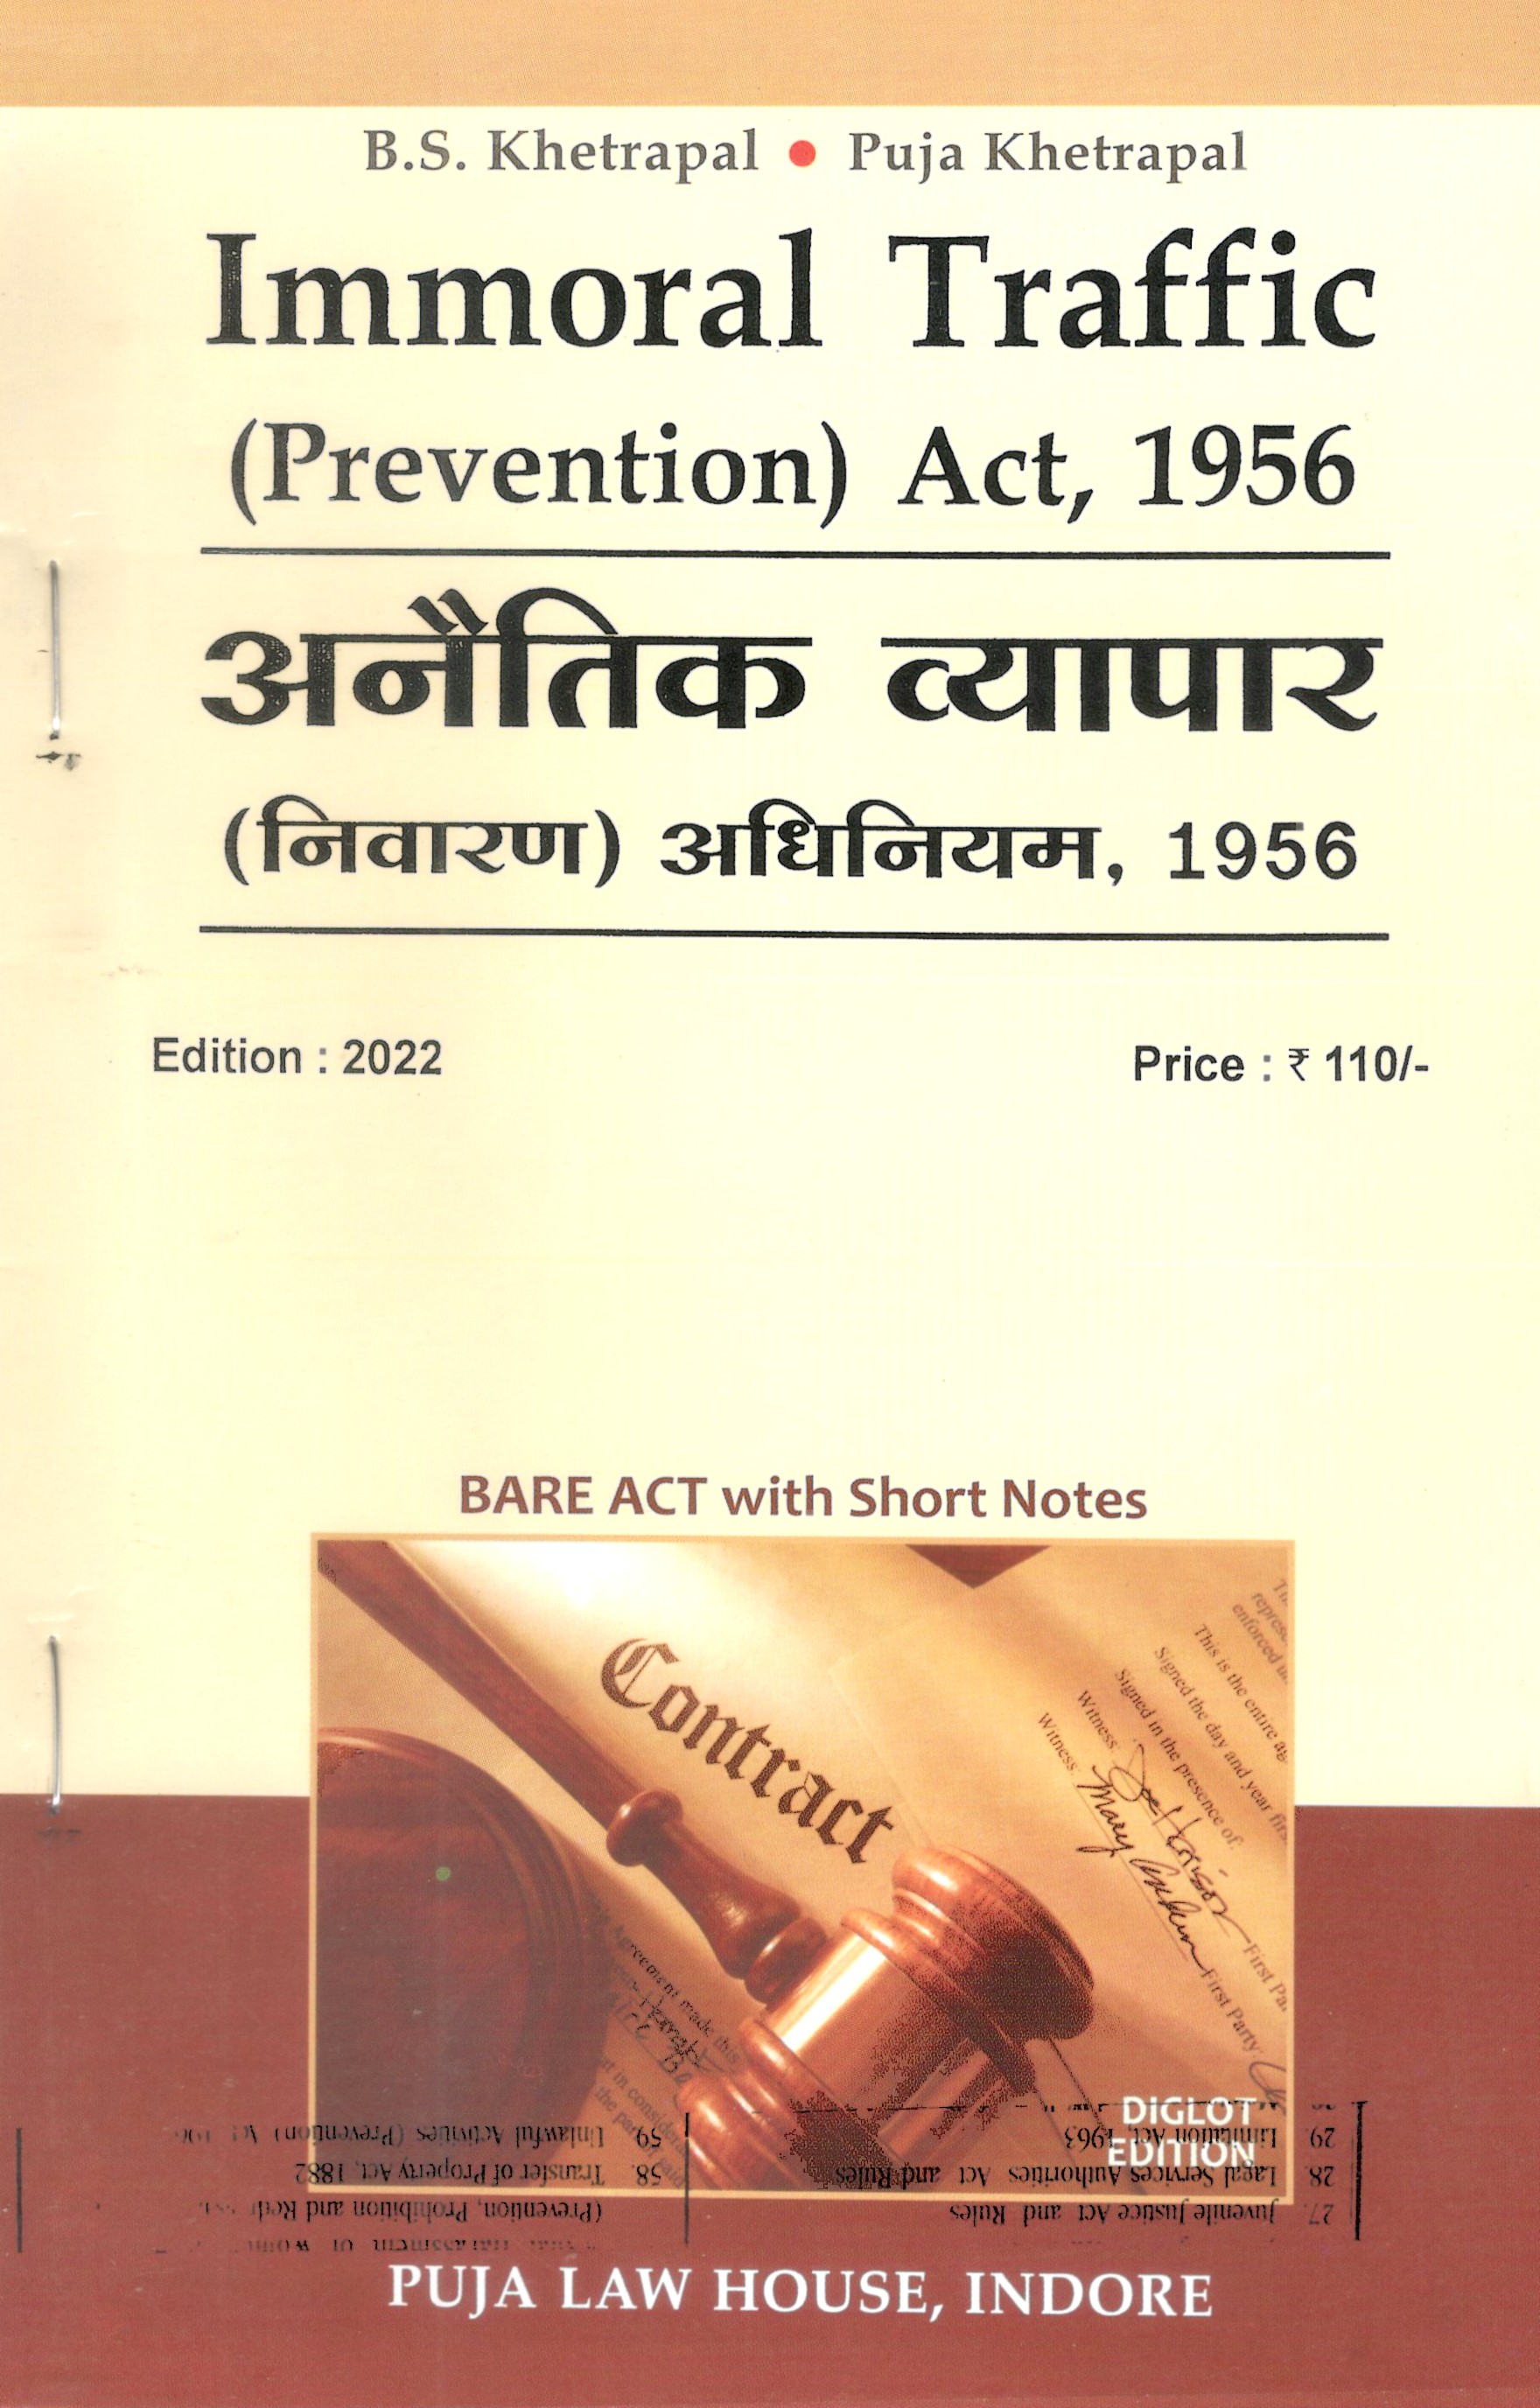  Buy अनैतिक व्यापार (निवारण) अधिनियम, 1956 / Immoral Traffic (Prevention) Act, 1956